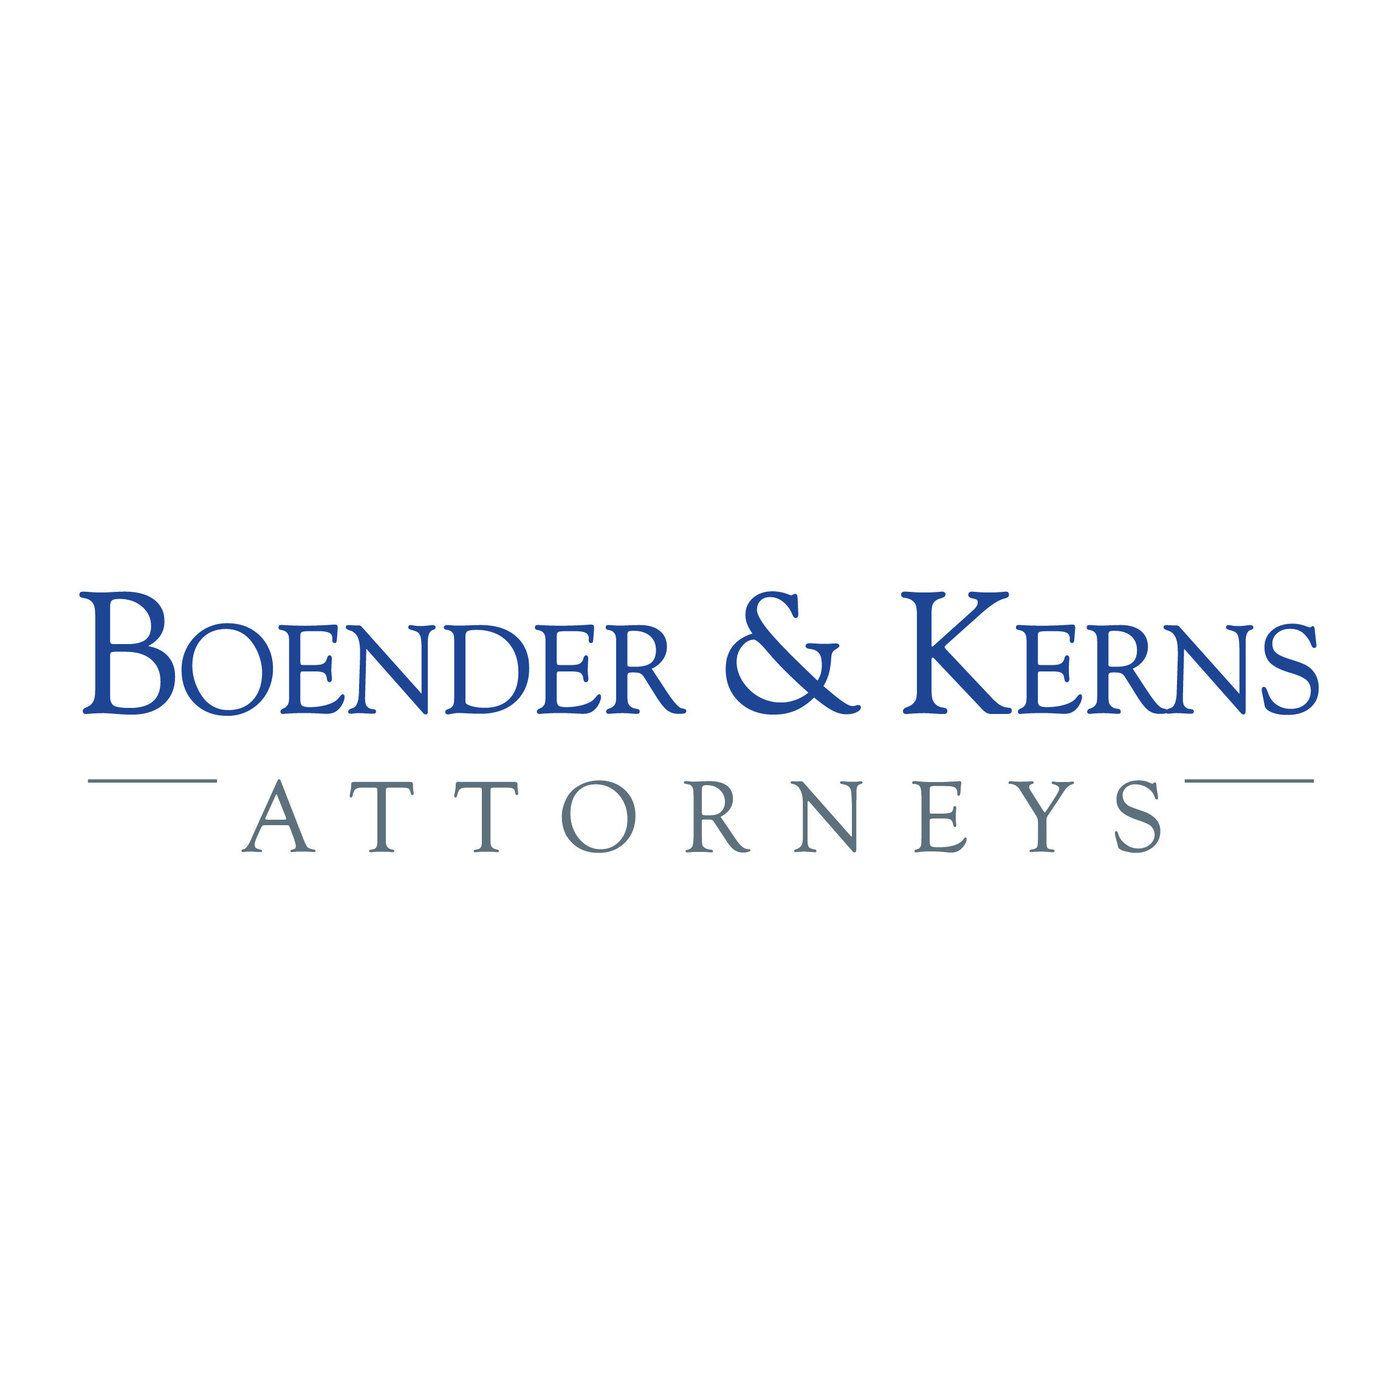 Kearns Logo - Boender & Kearns Logo Design By Susan Petruska Garzon At Coroflot.com